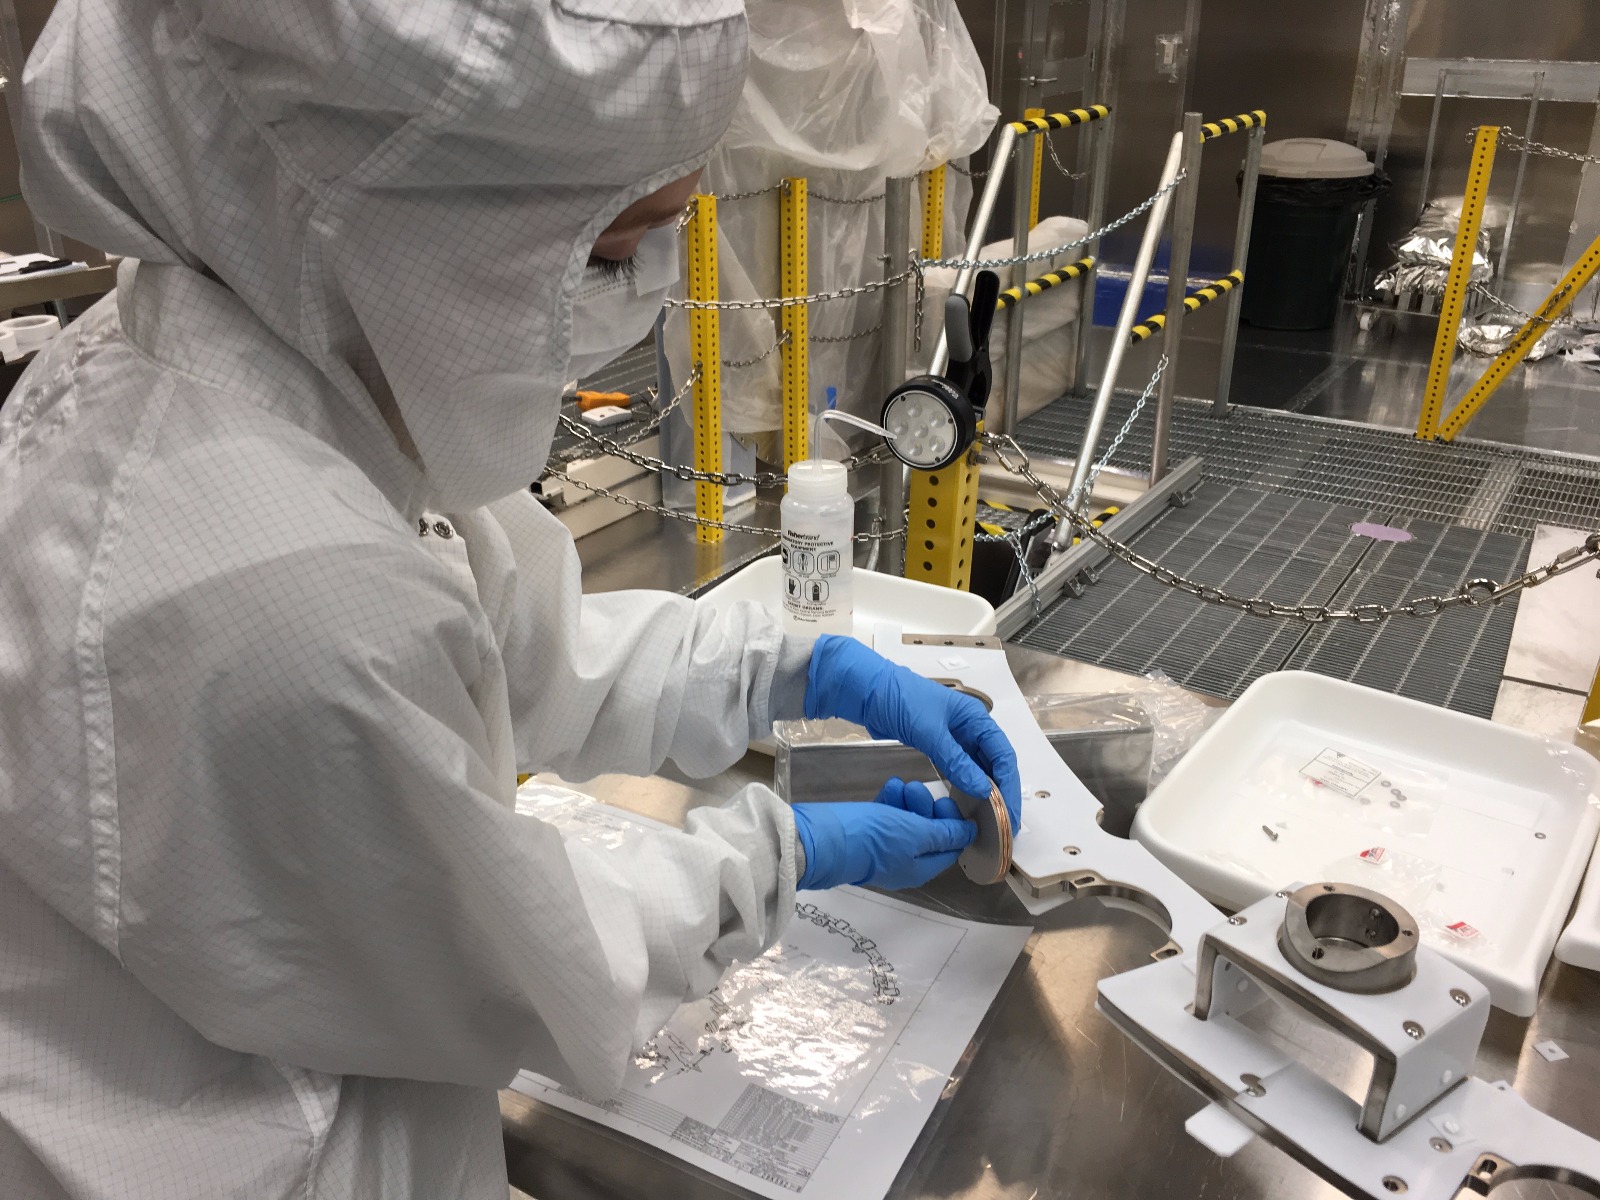 Researcher in clean suit installs a sensor